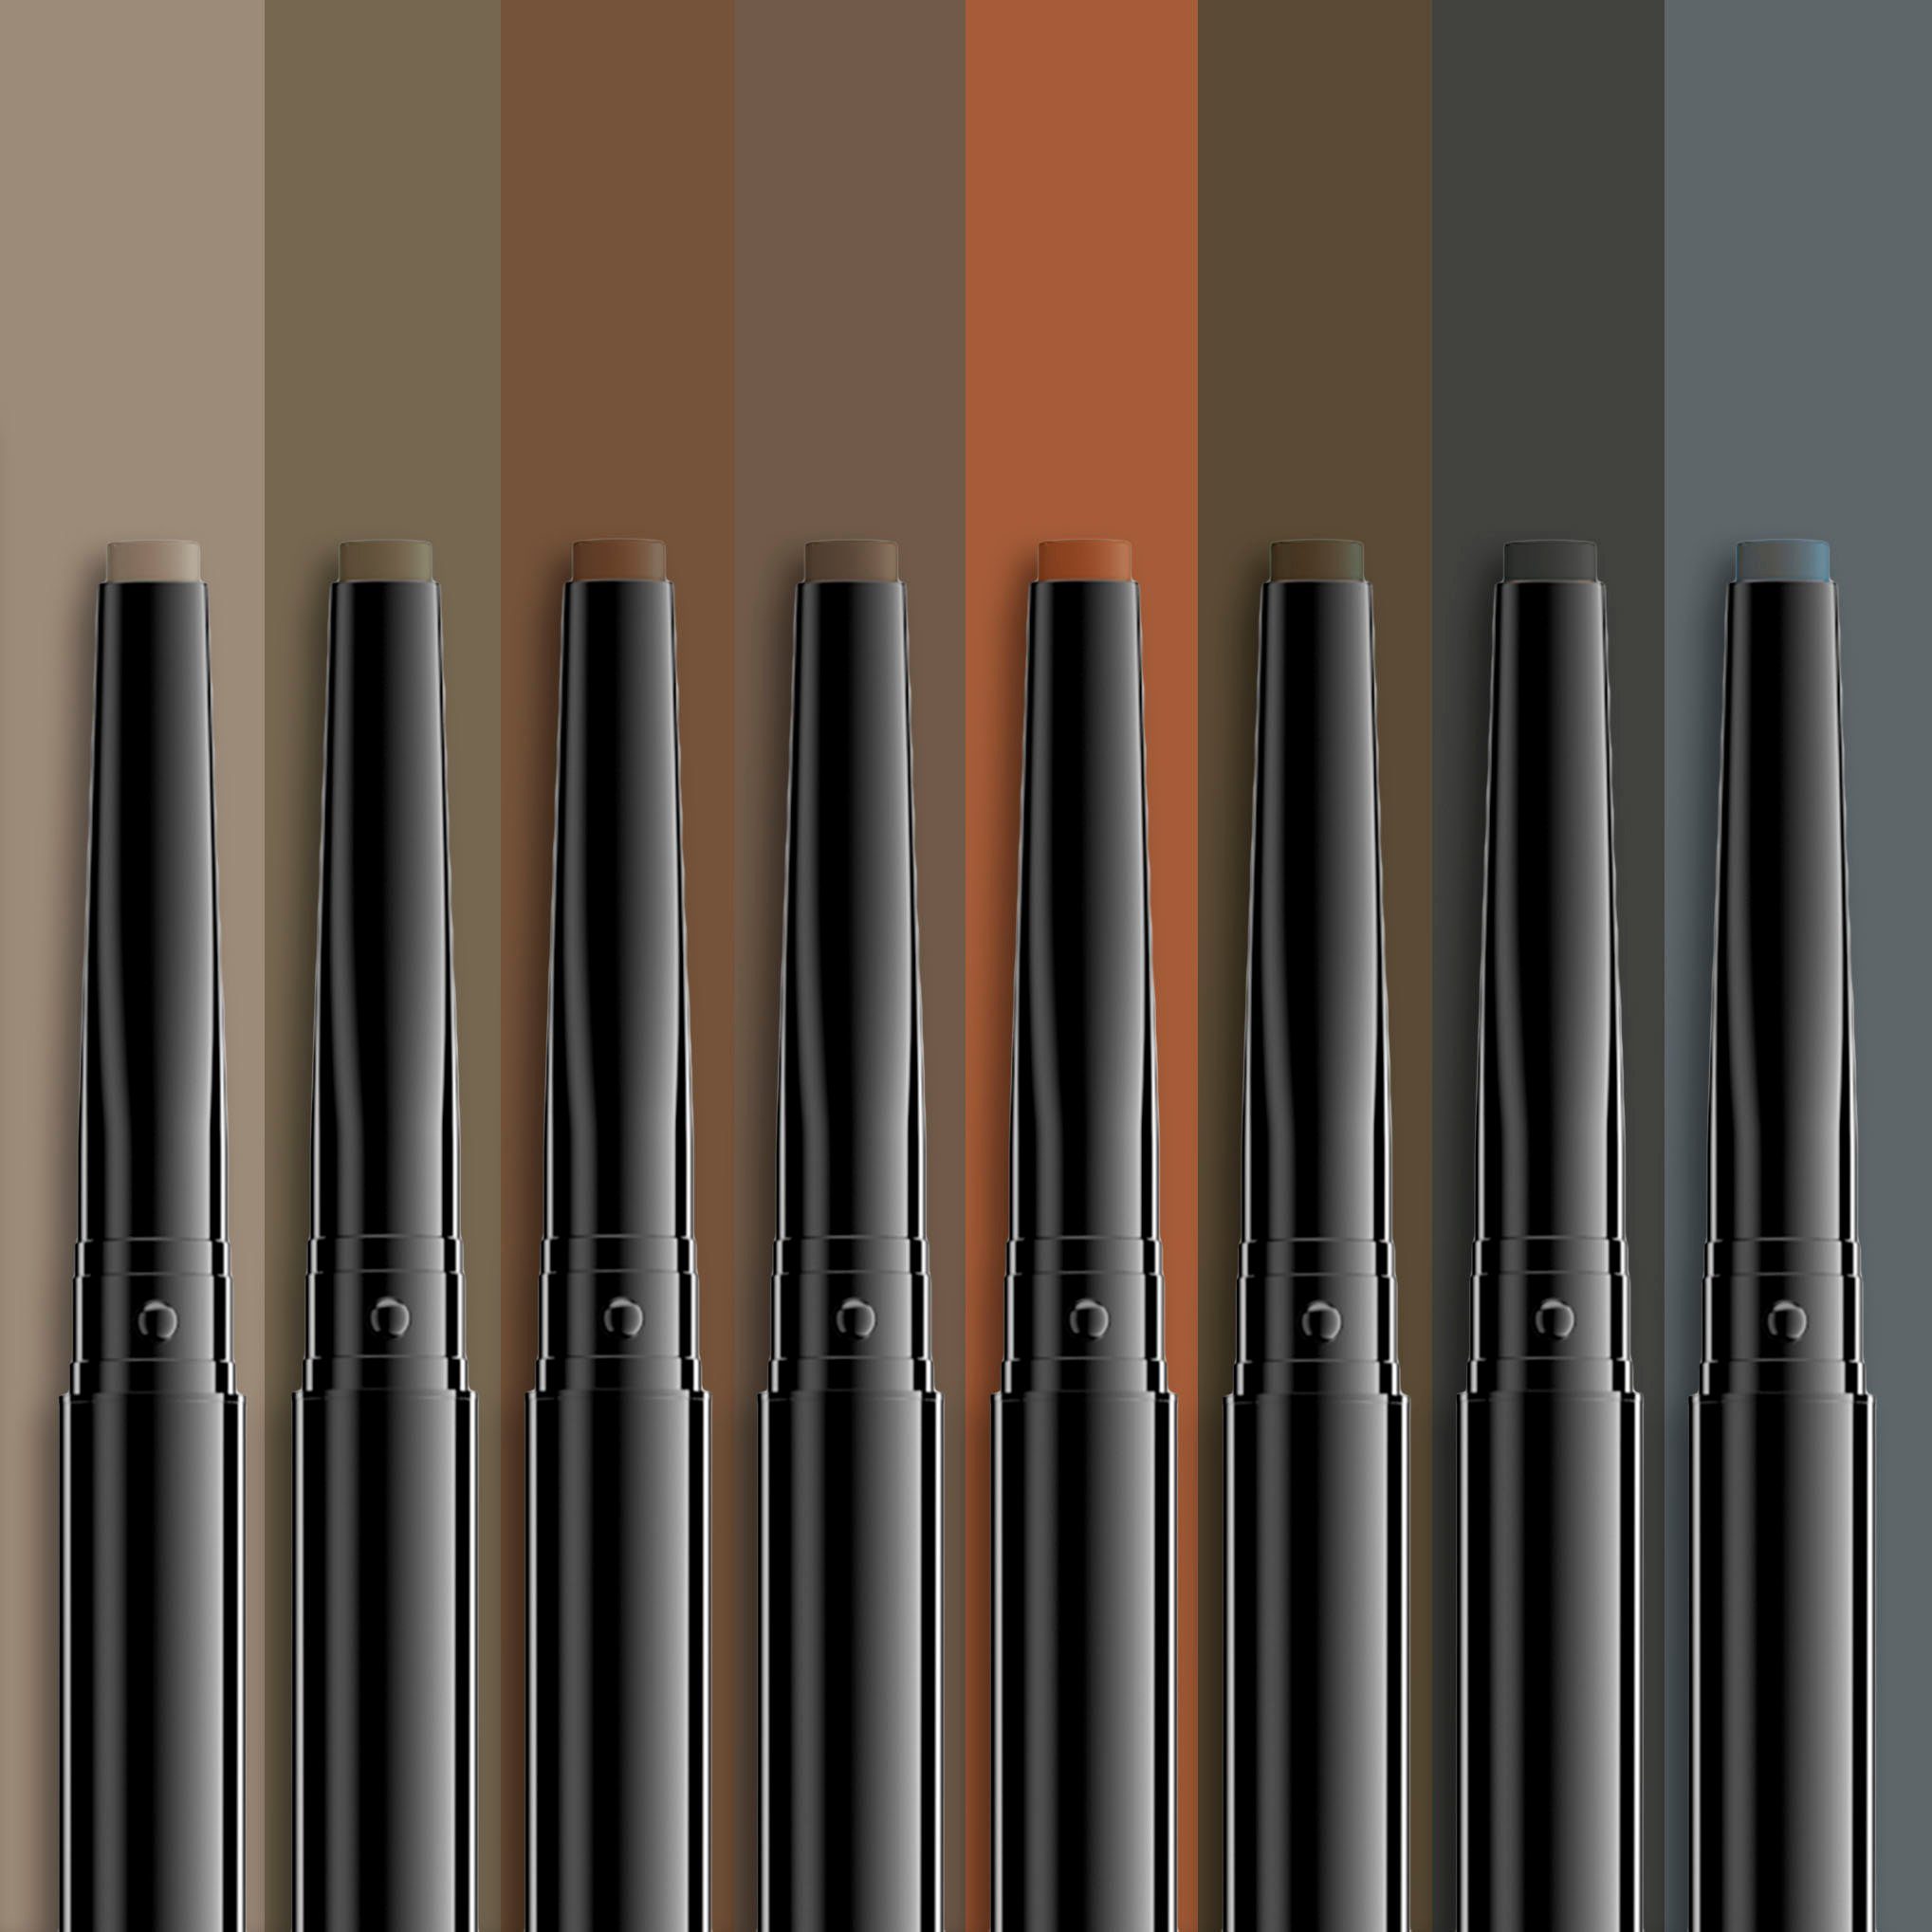 NYX Augenbrauen-Stift Professional Makeup Pencil Brow taupe Precision